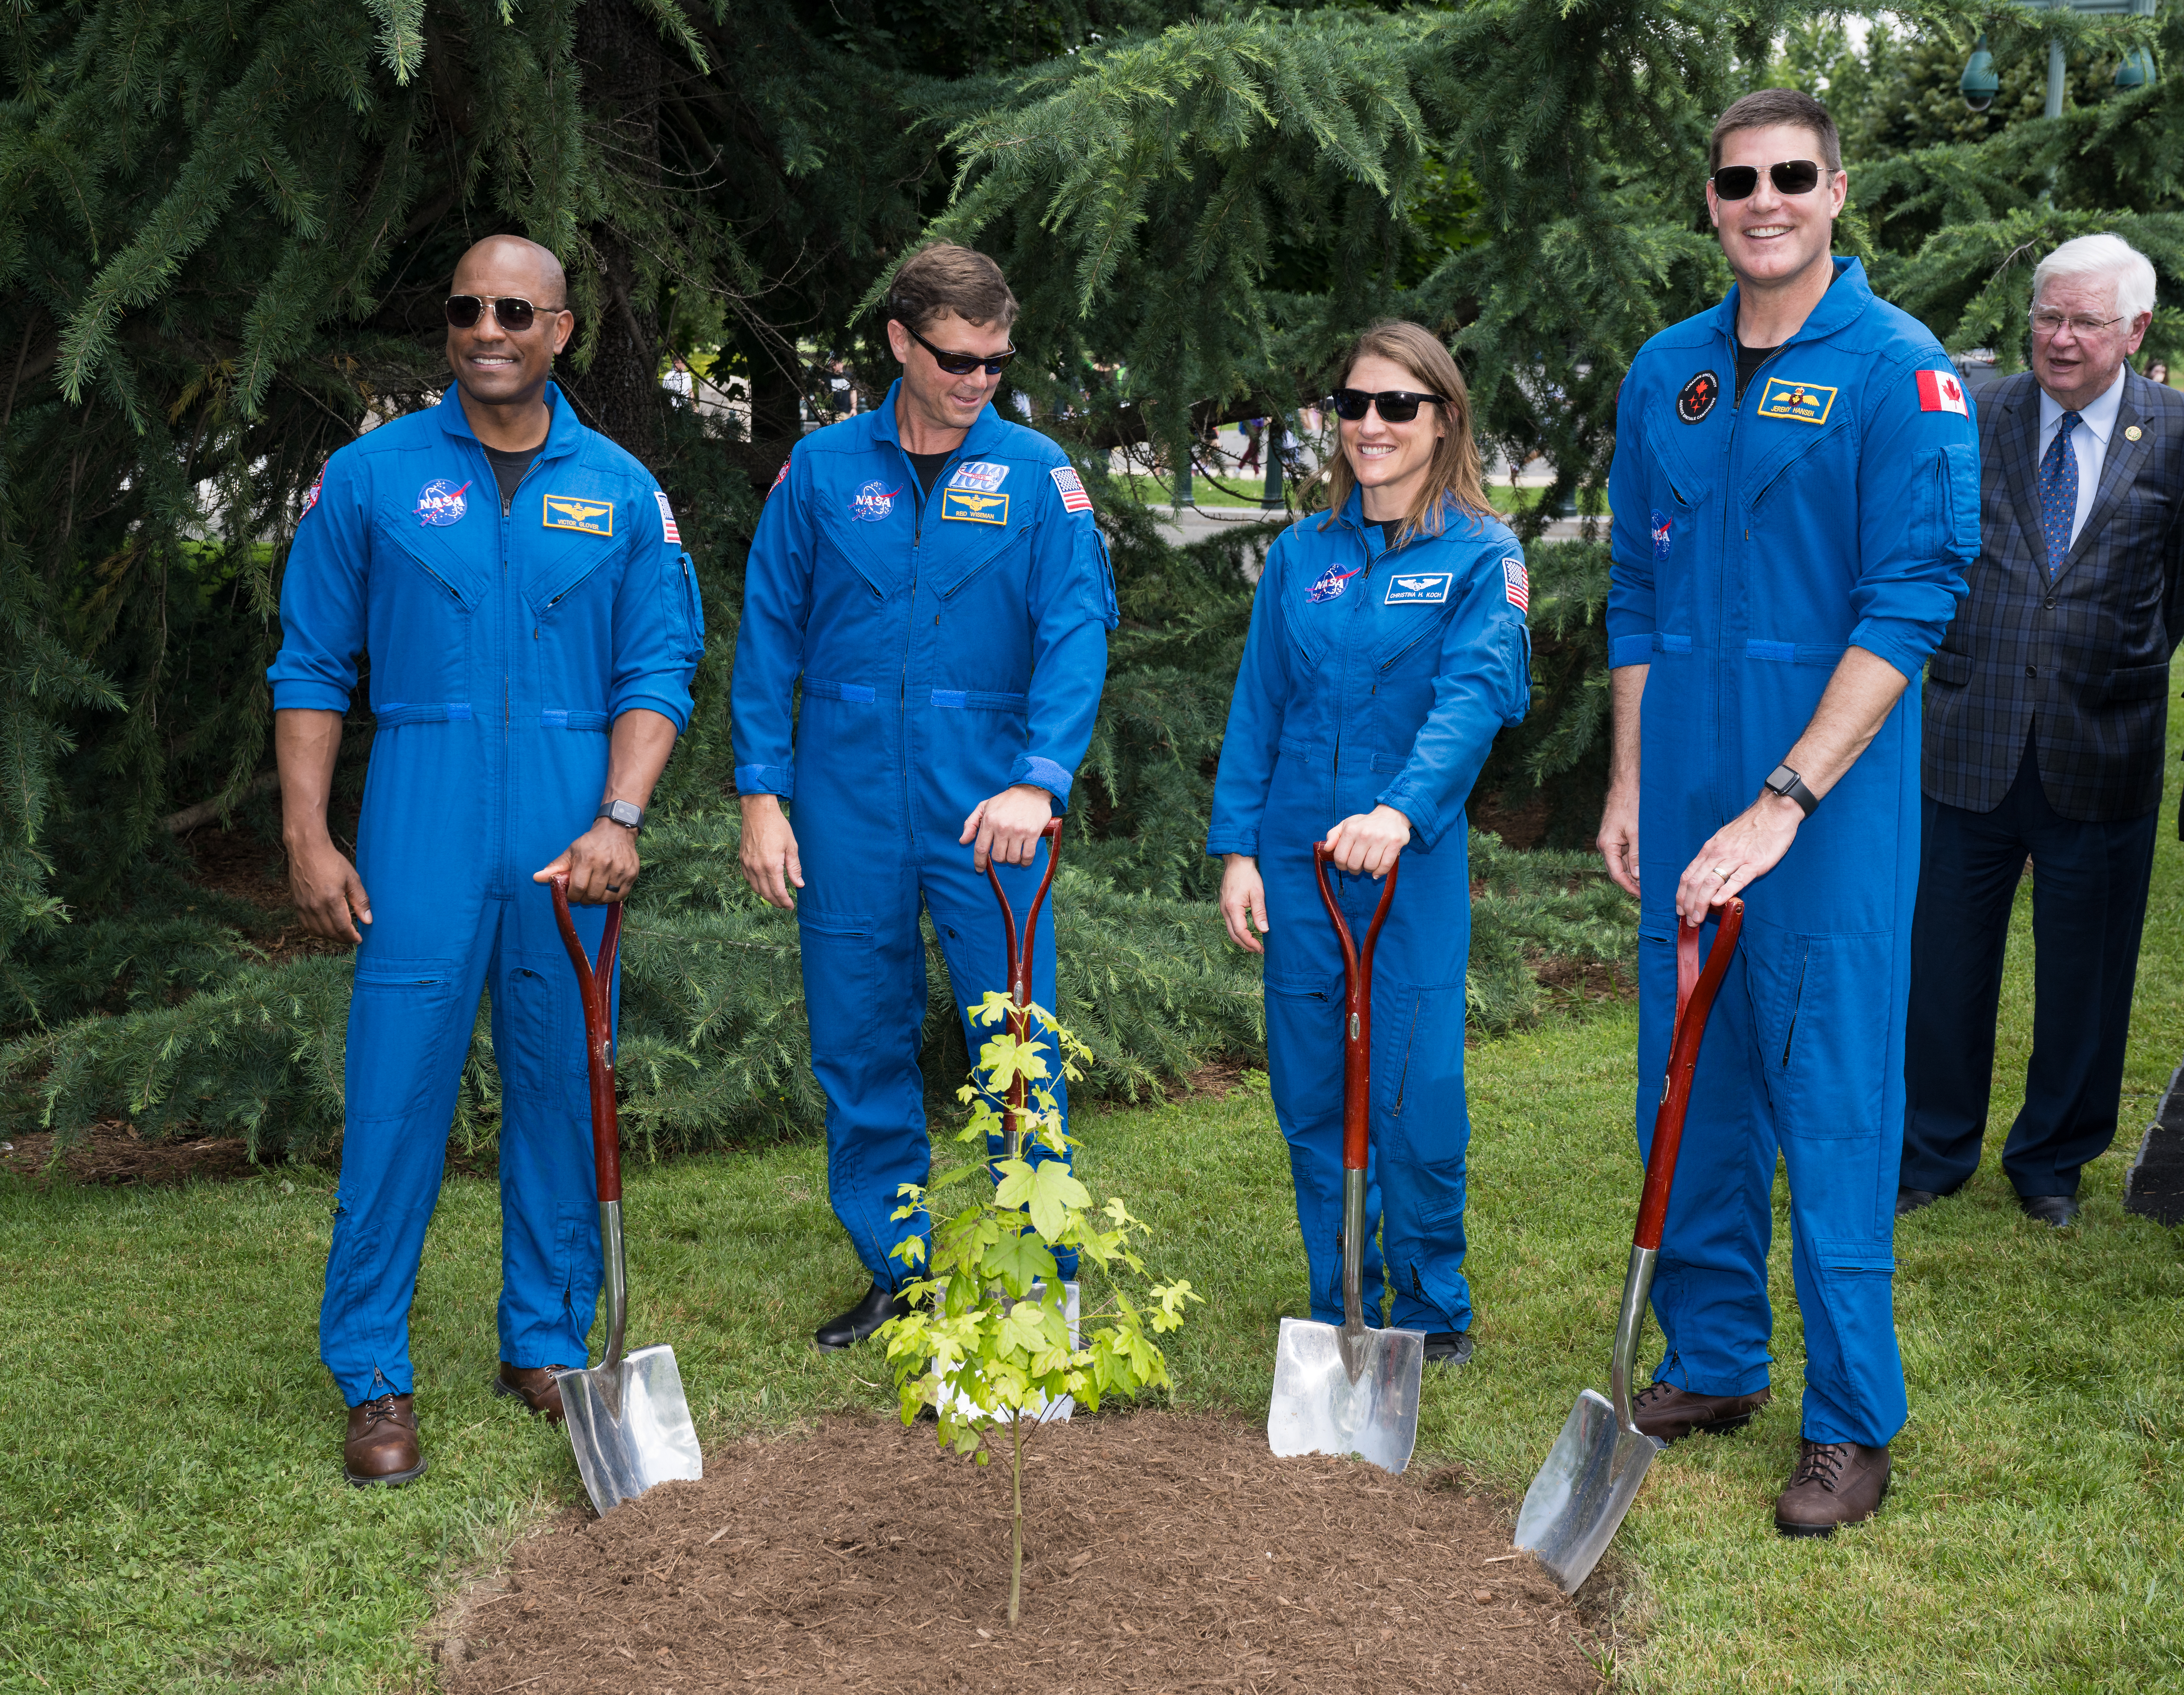 Artemis II Astronauts Participate in Moon Tree Dedication Ceremony